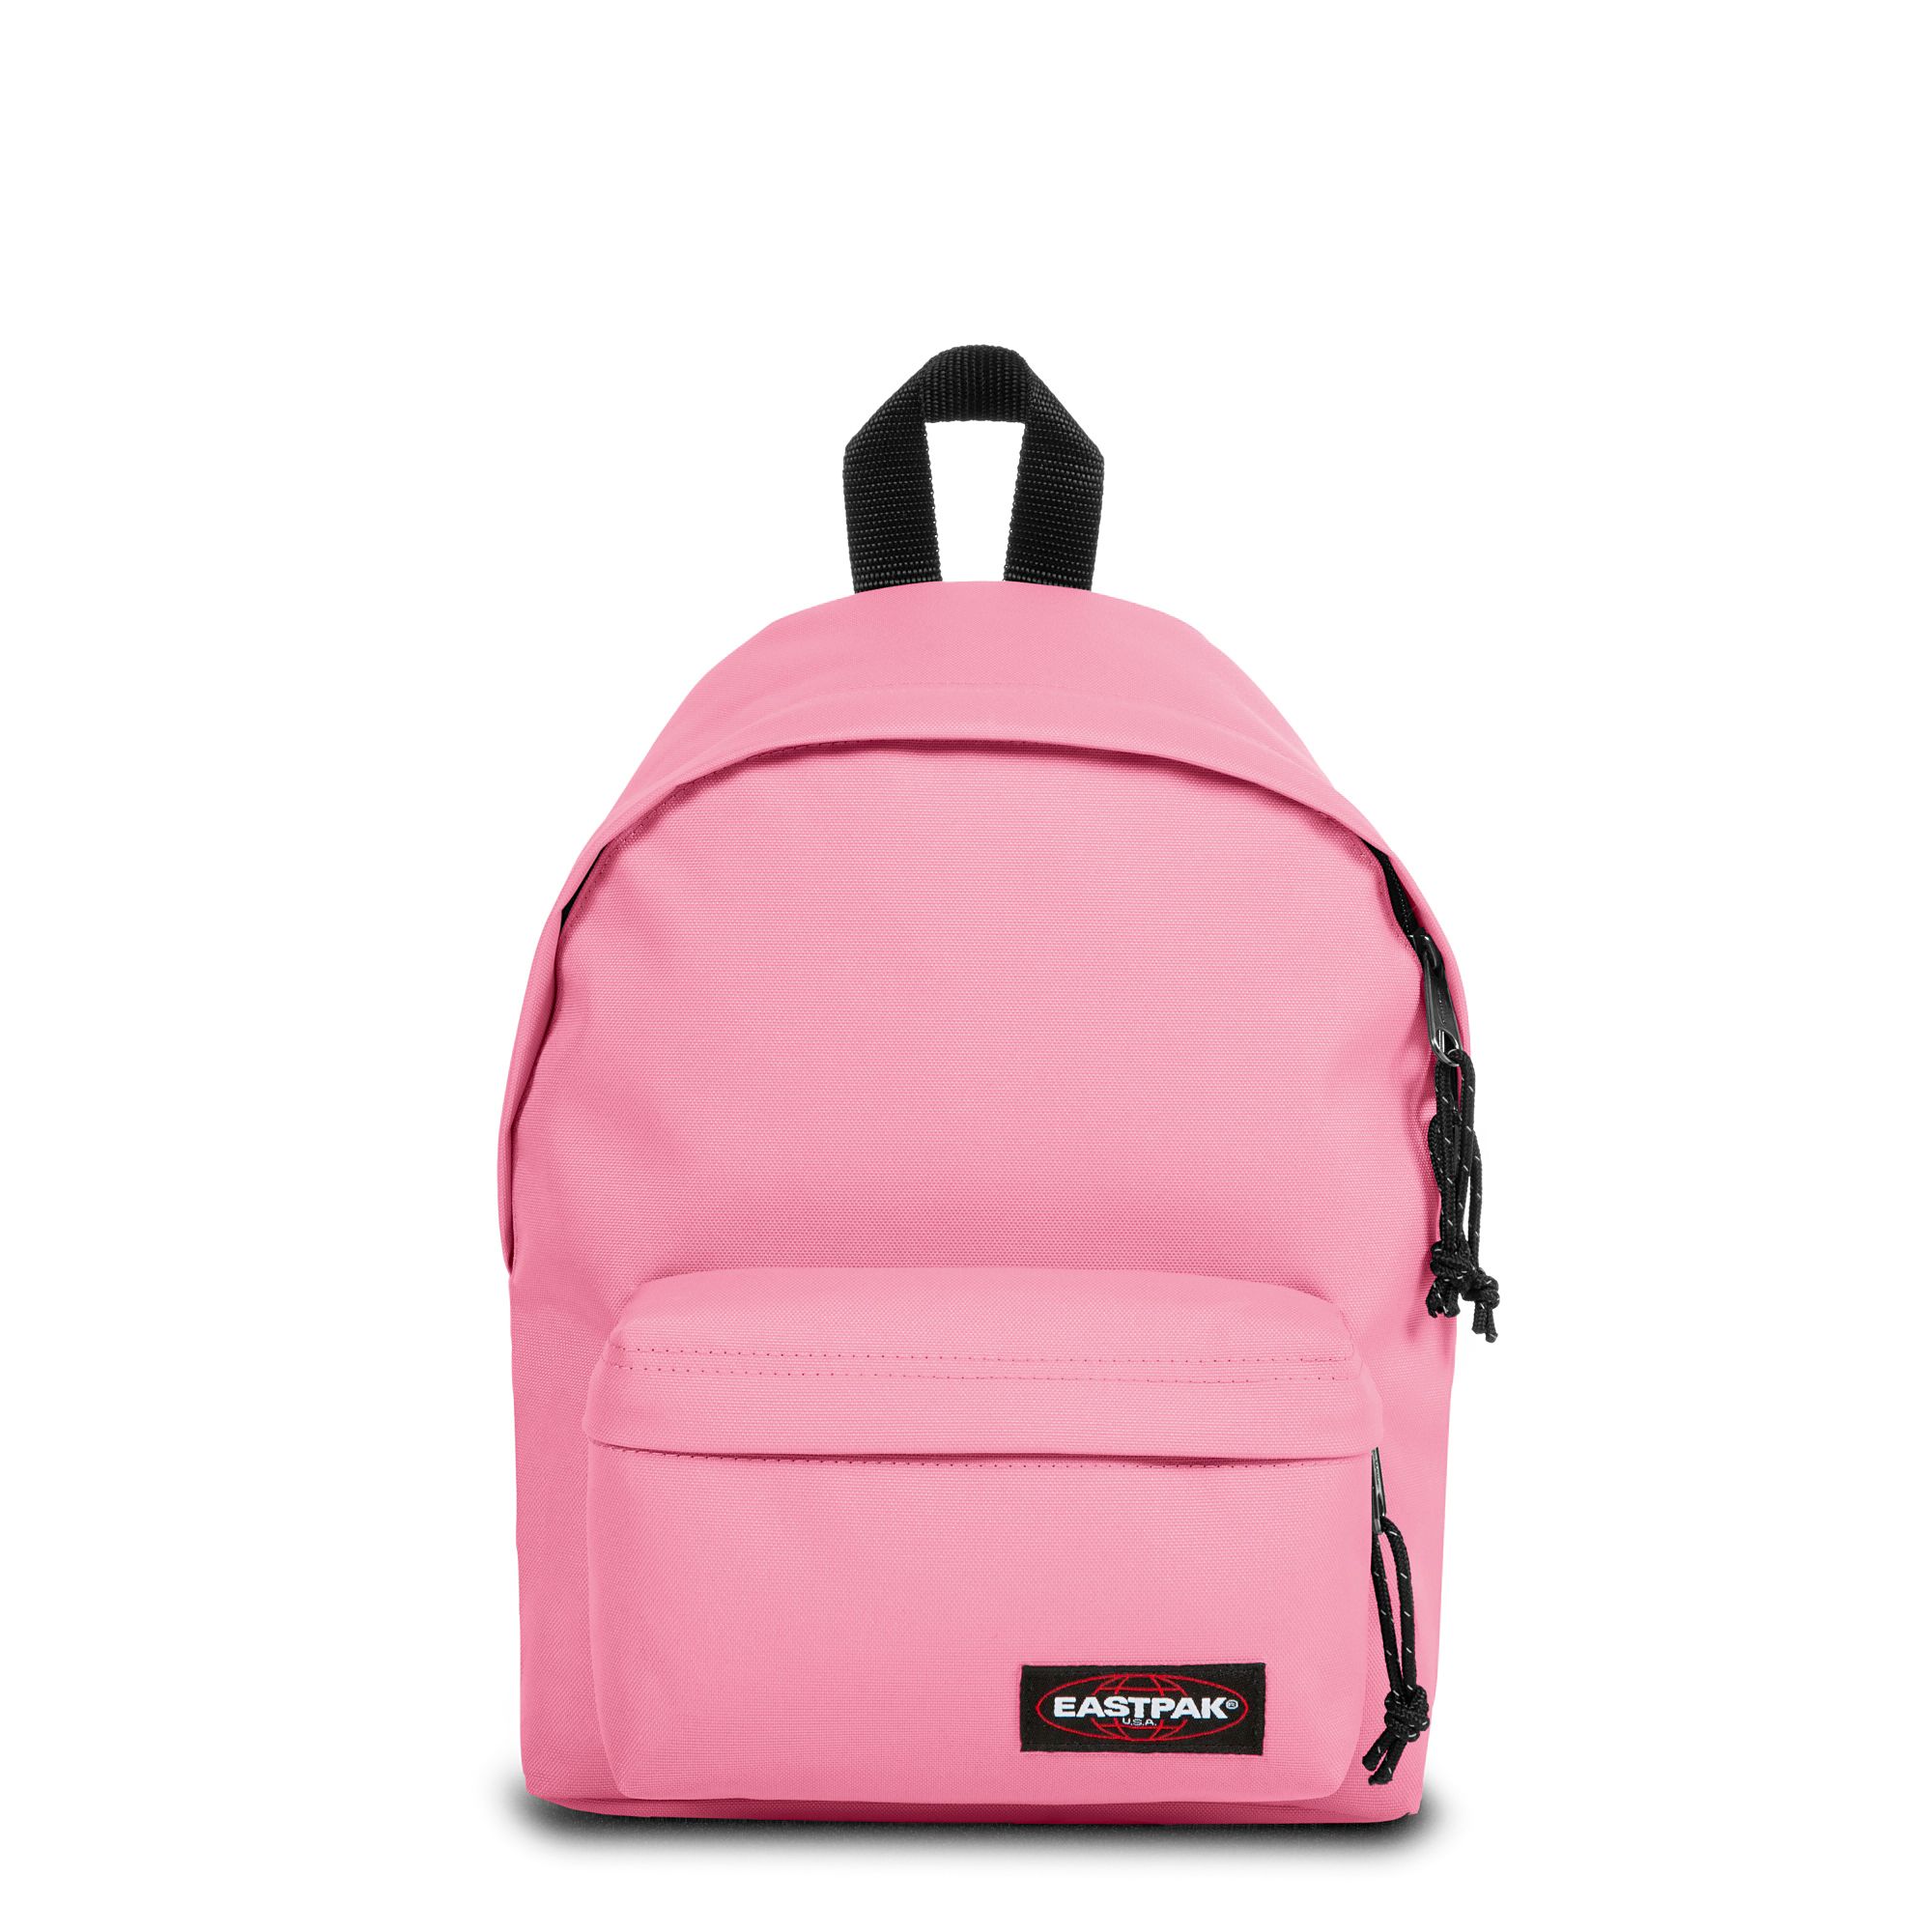 Backpack style: Eastpak